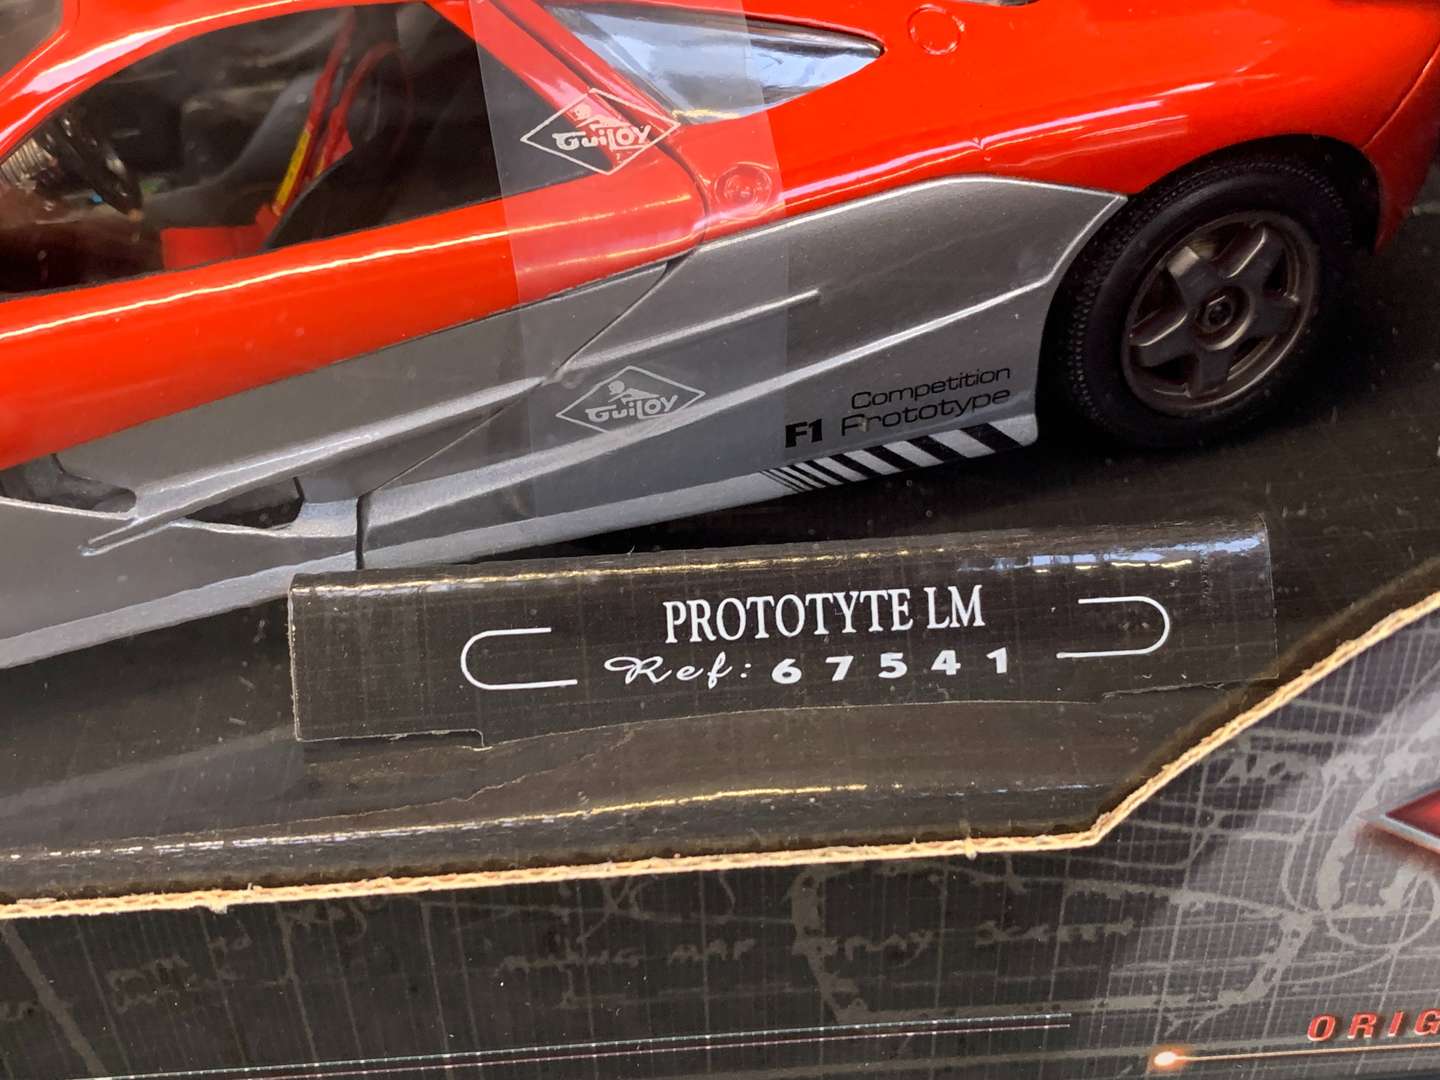 <p>Guiloy 1;18 Scale Boxed Prototyte LM Car</p>